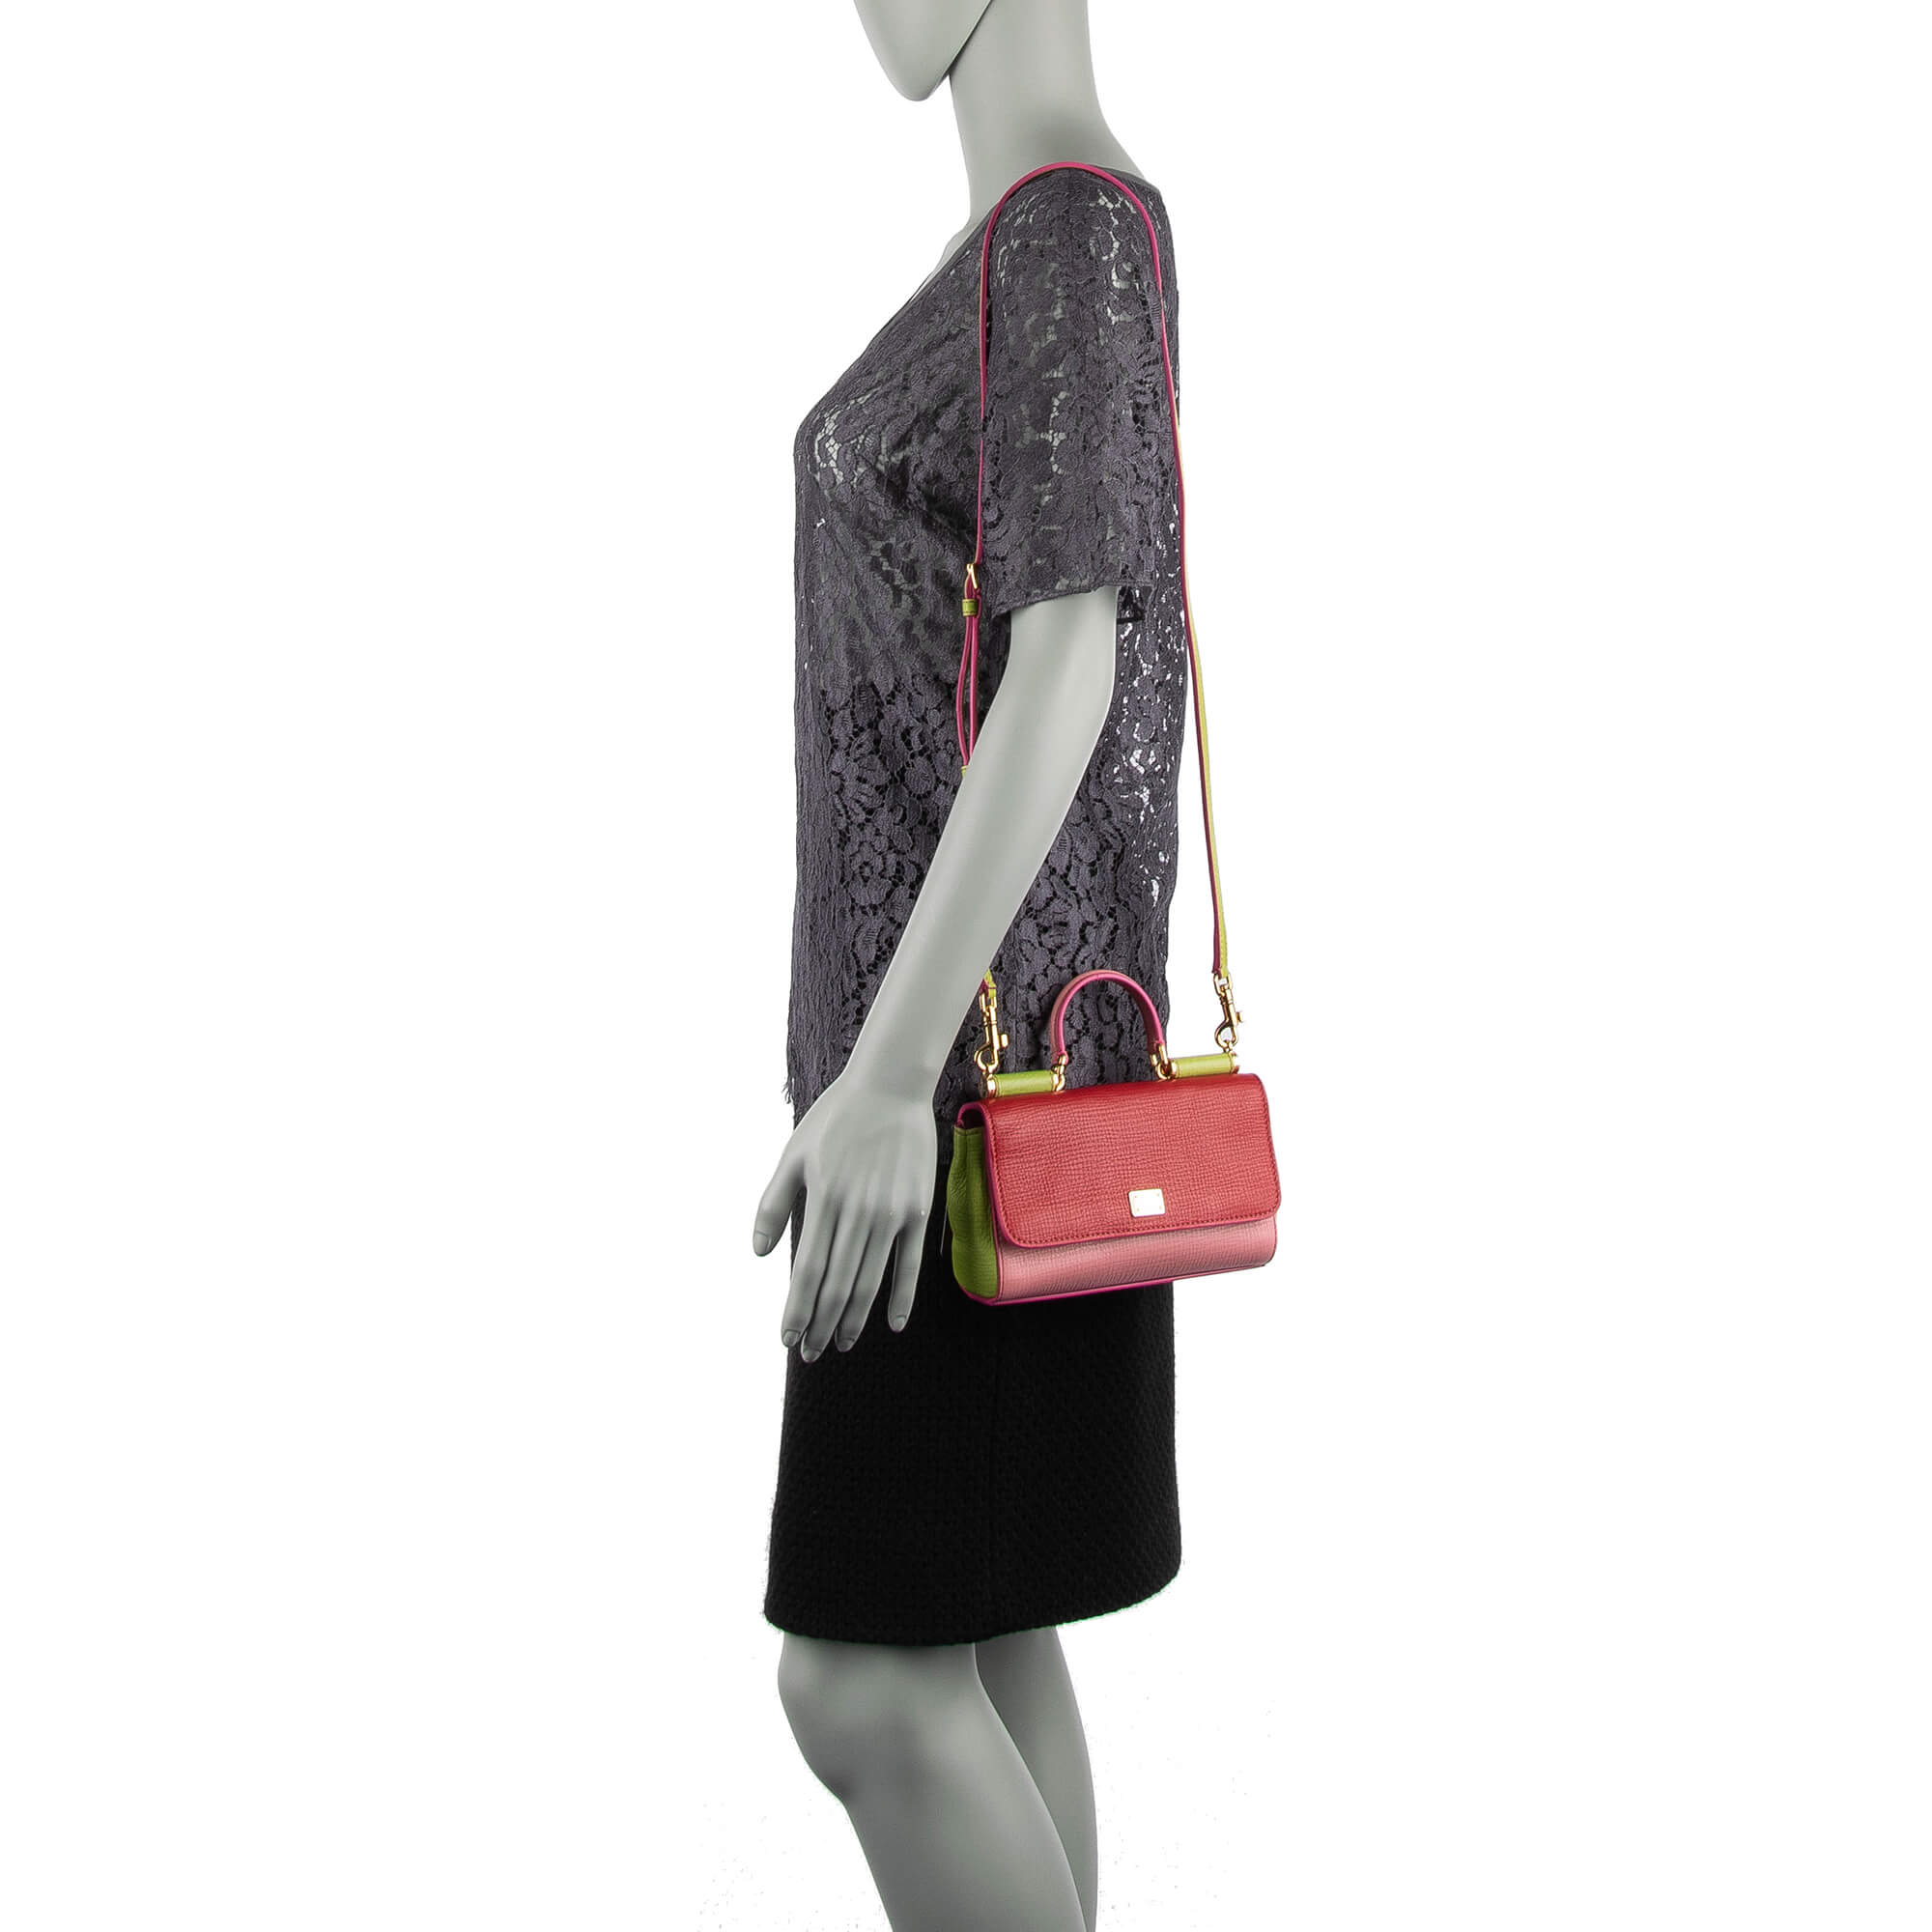 Sicily leather handbag Dolce & Gabbana Pink in Leather - 34776901